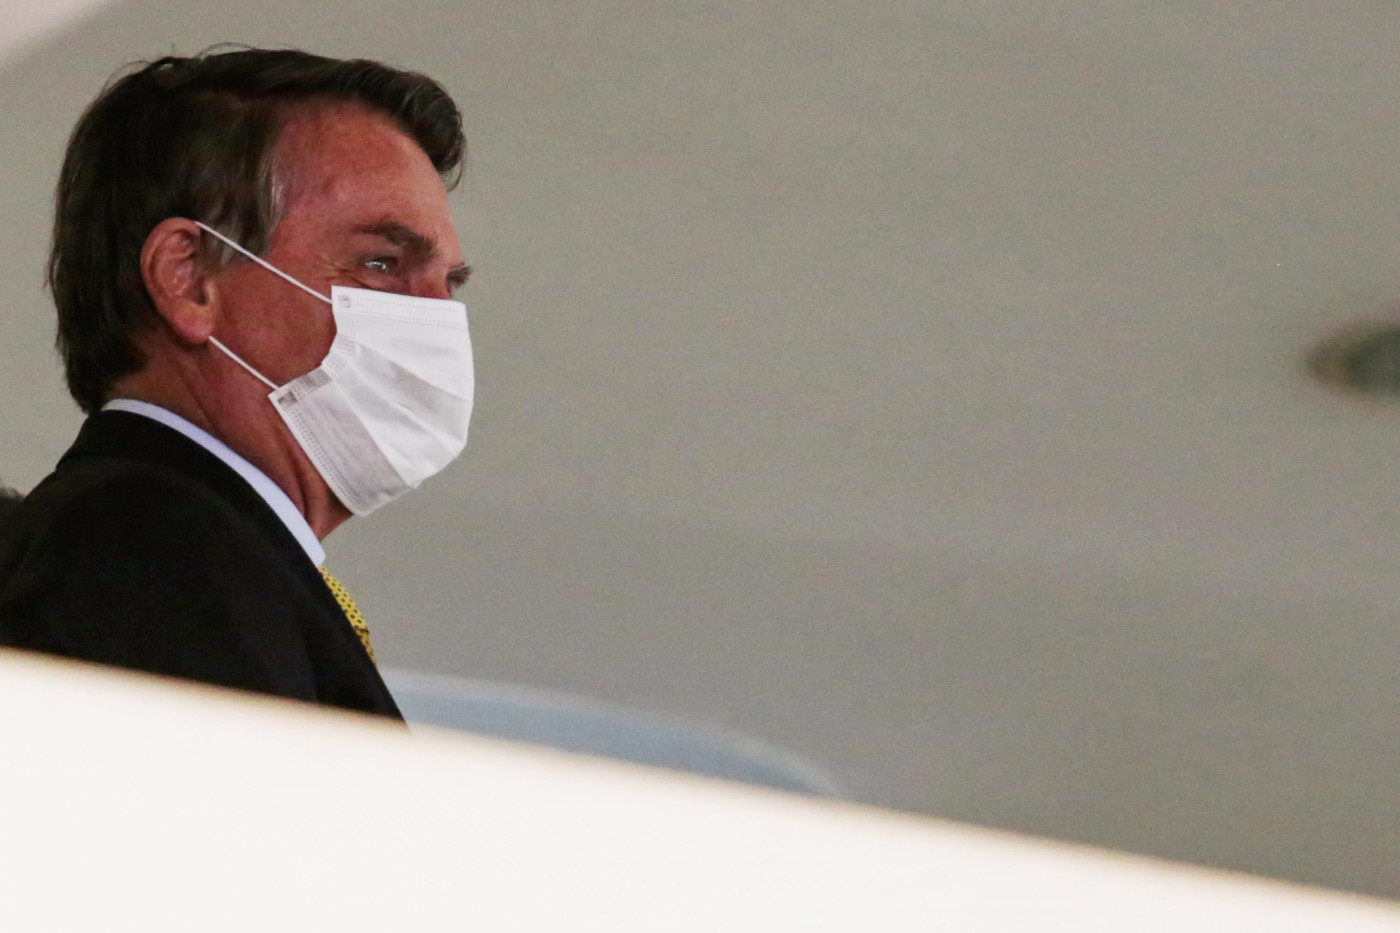 Presidente Jair Bolsonaro usa máscara de proteção branca